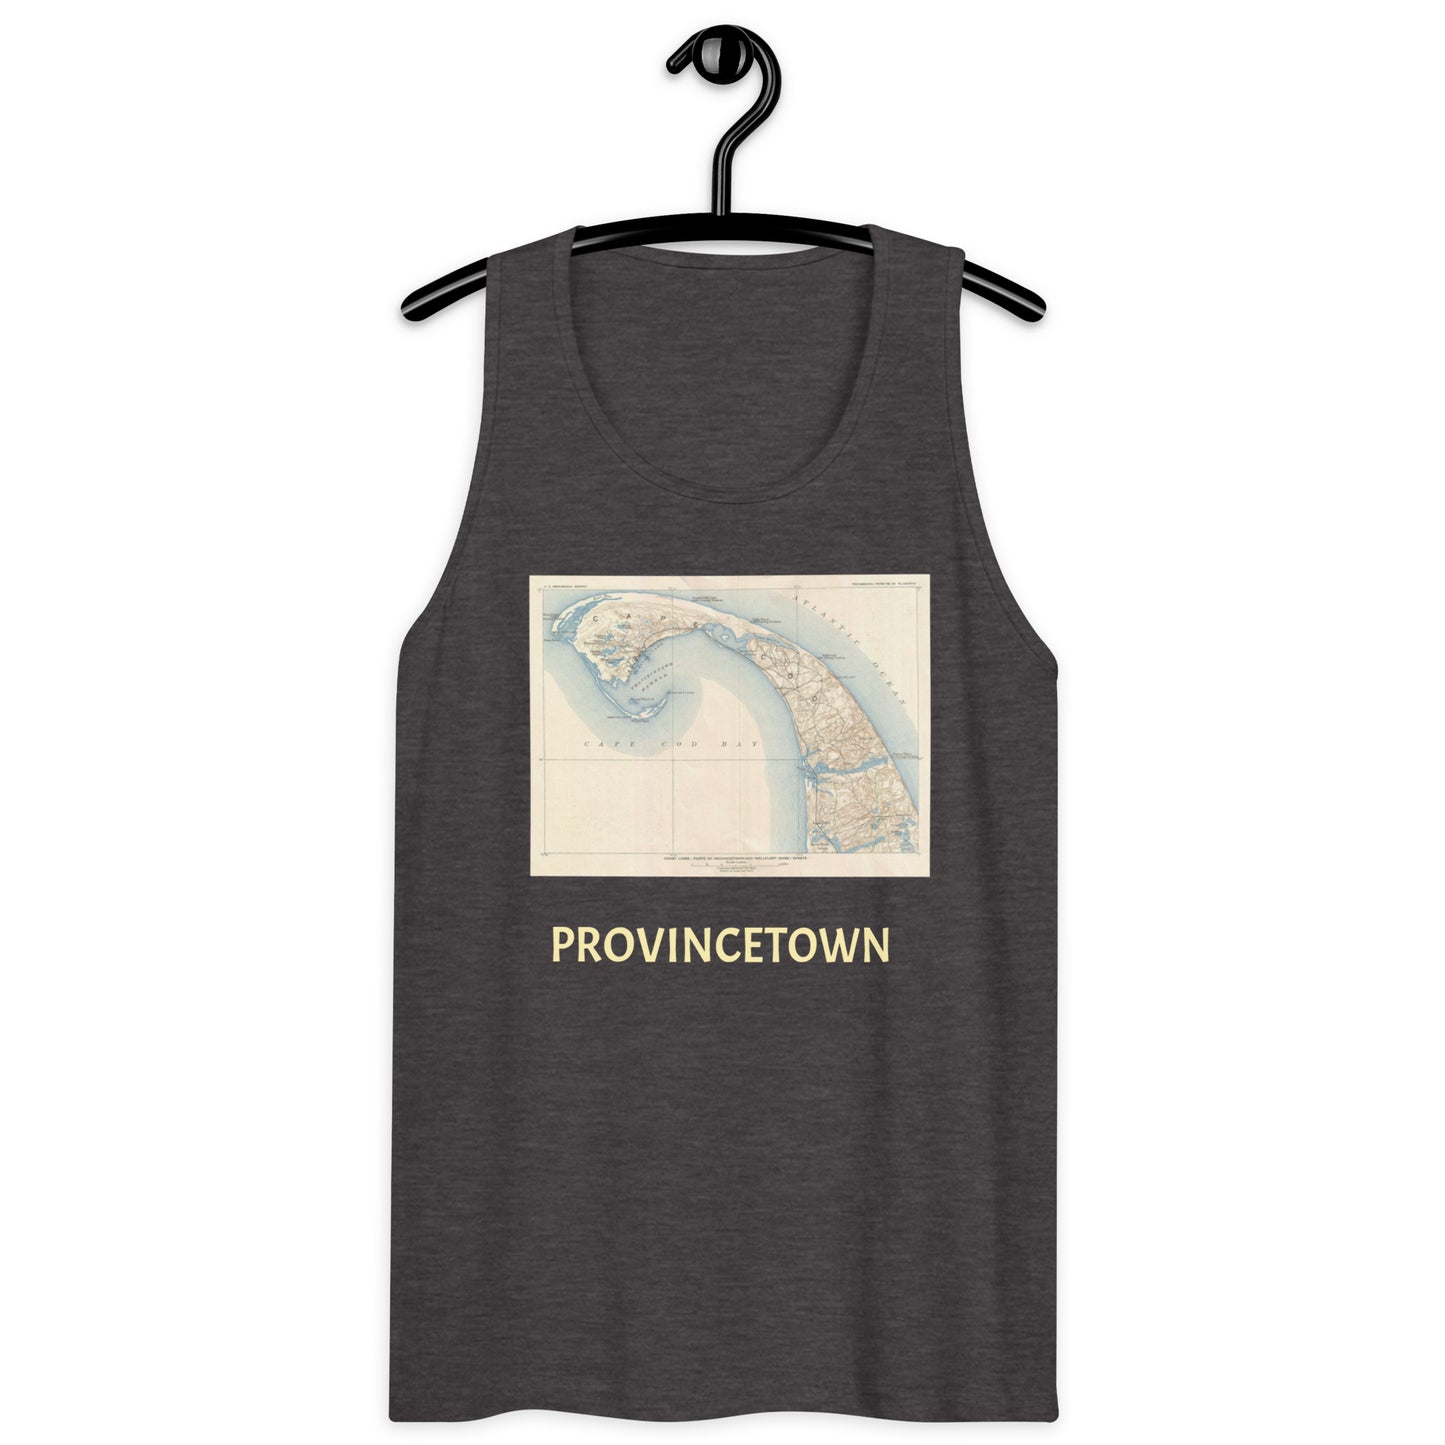 Provincetown men’s premium tank top